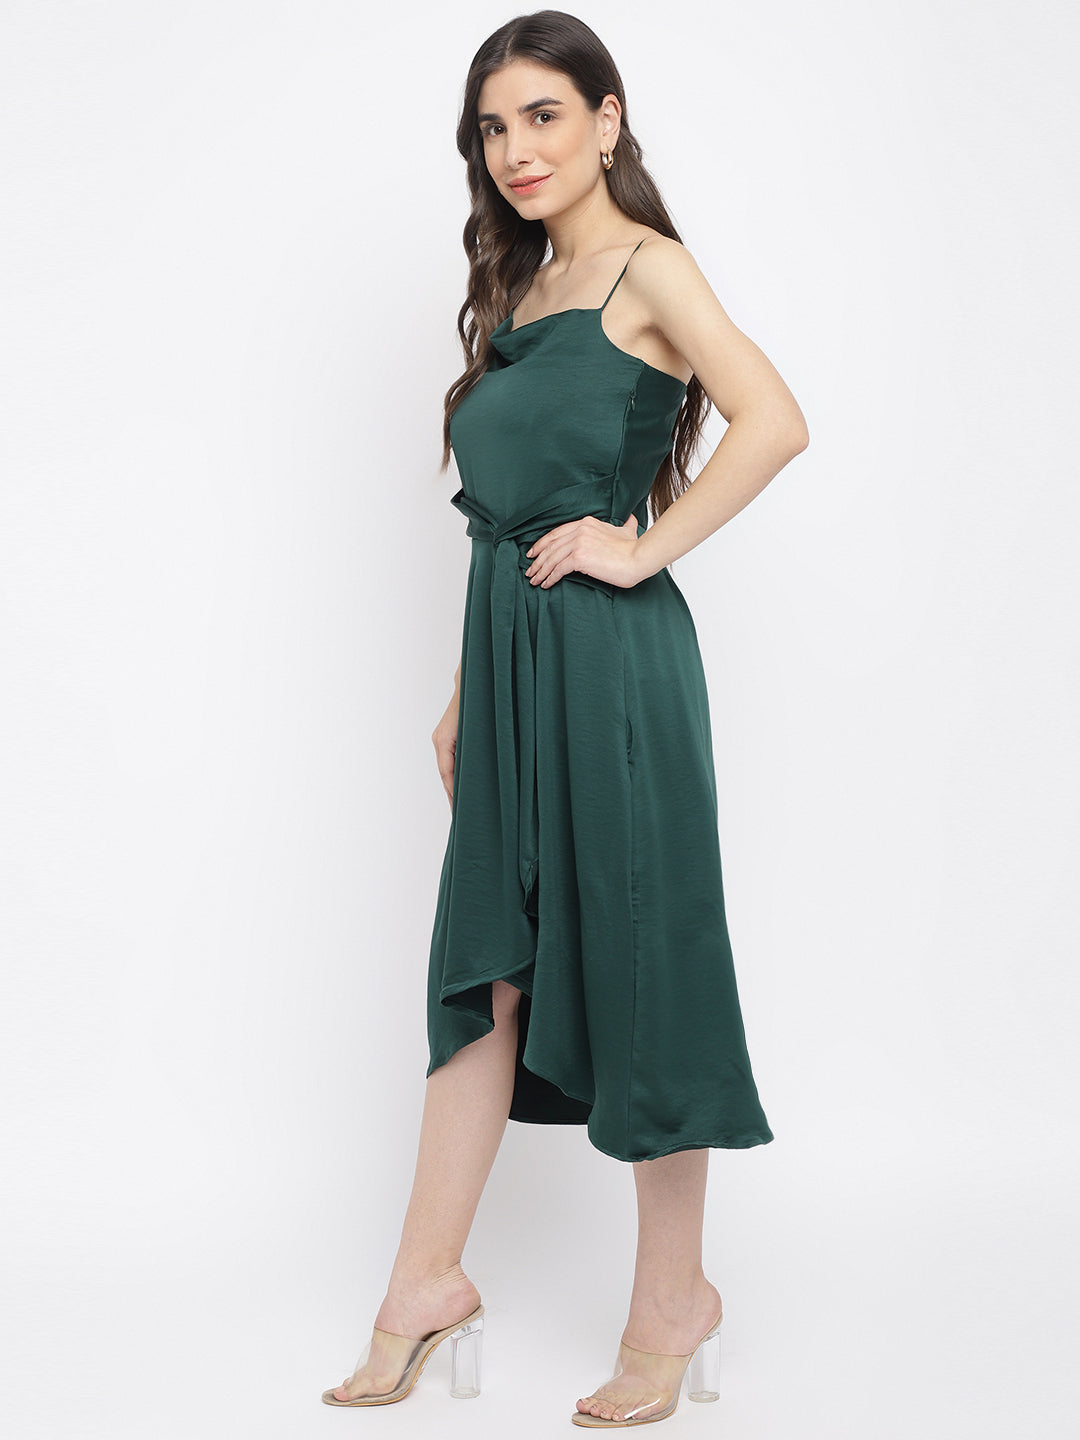 Green Sleeveless Solid High Low Dress